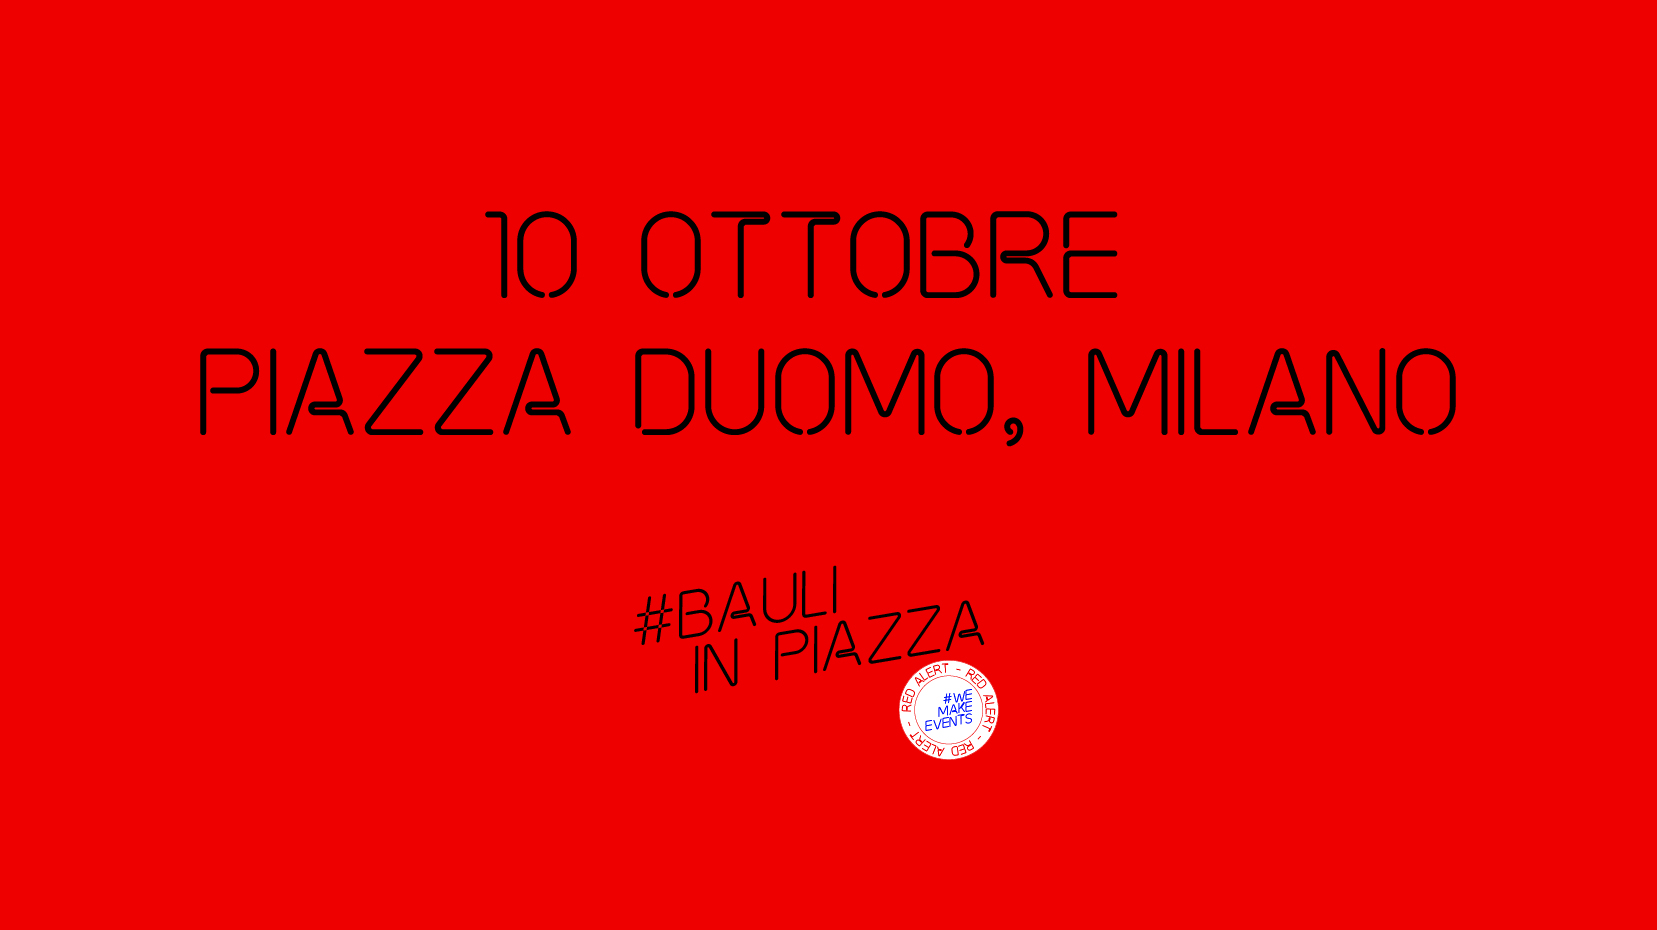 BAULI IN PIAZZA - 10 ottobre Piazza Duomo, Milano